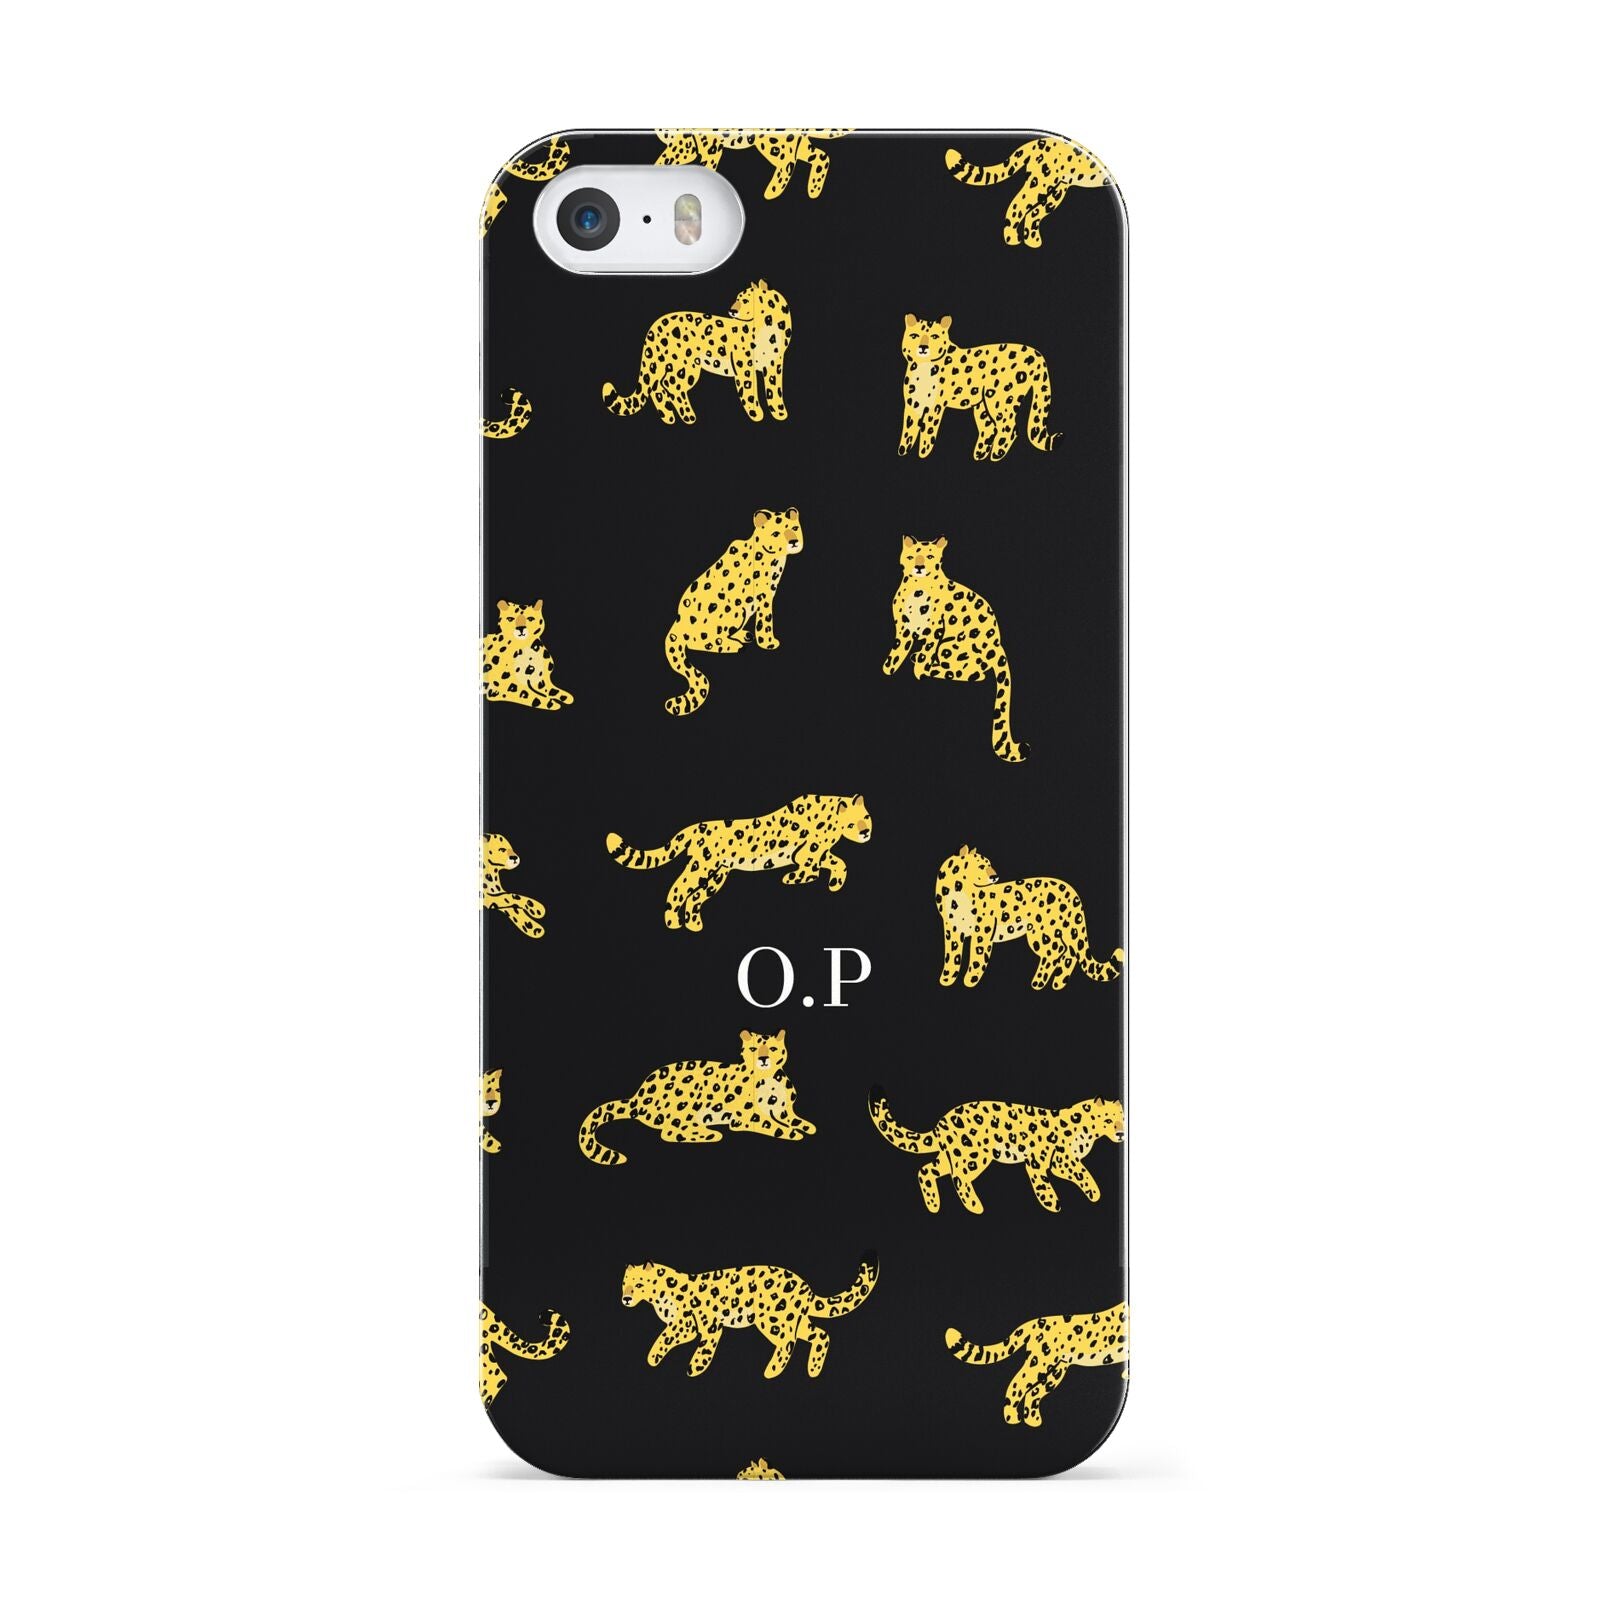 Prowling Leopard Apple iPhone 5 Case